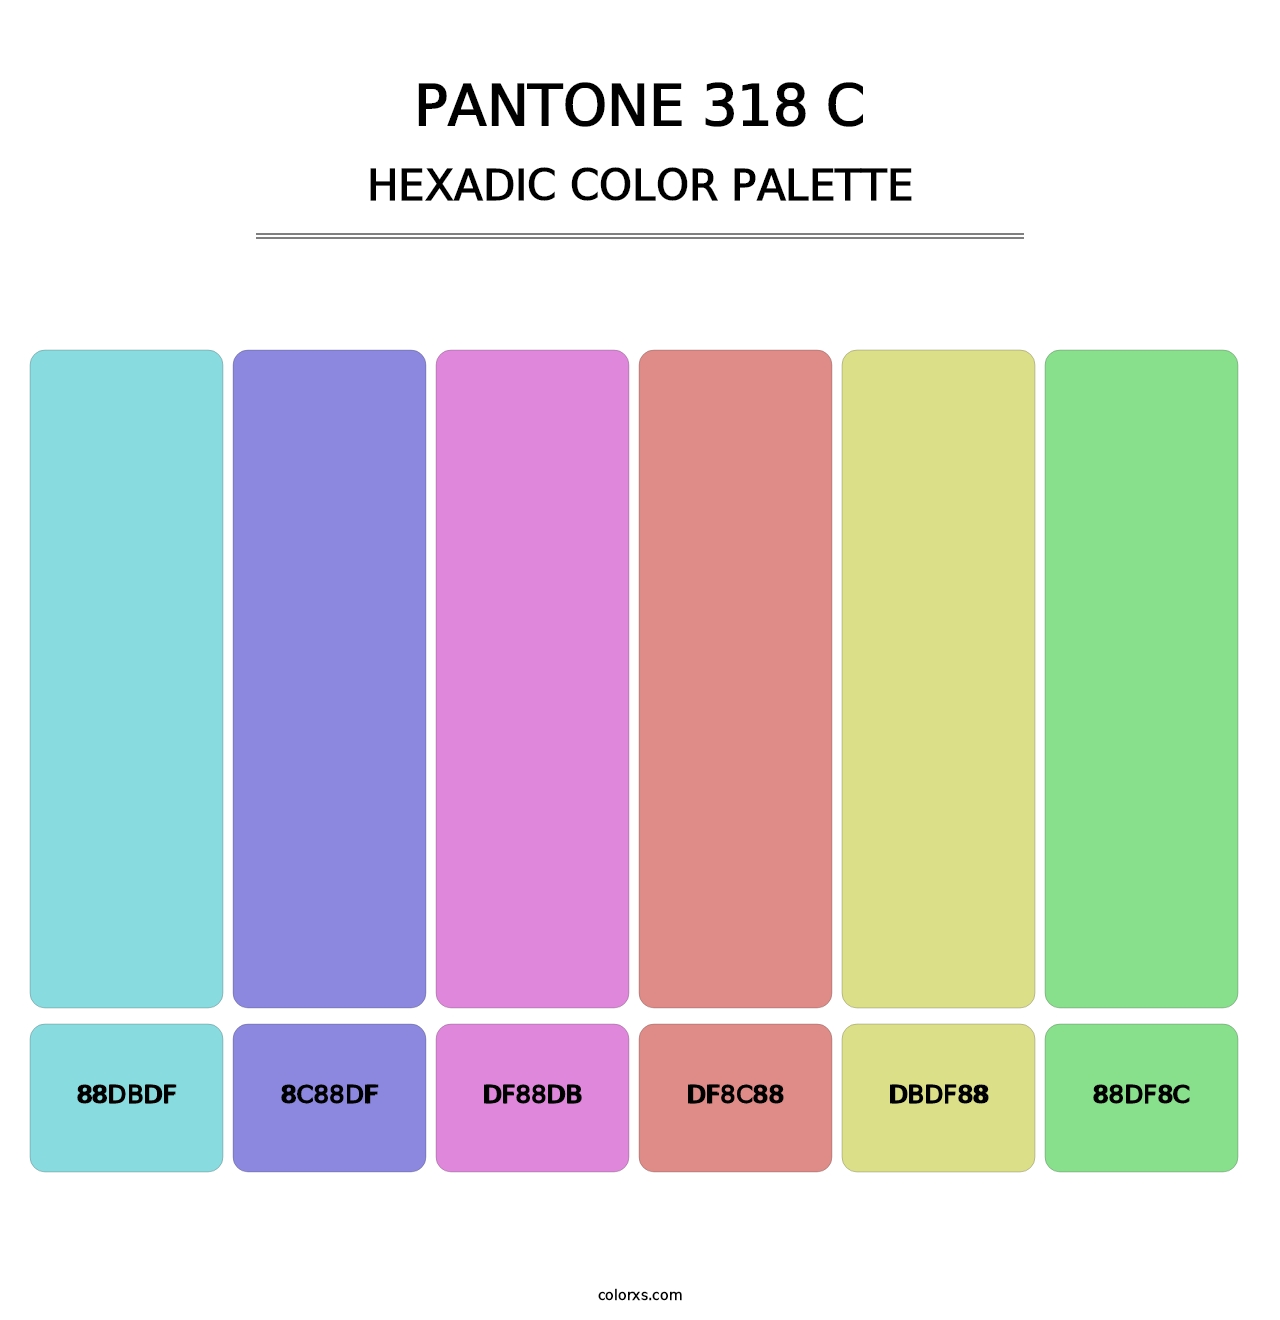 PANTONE 318 C - Hexadic Color Palette